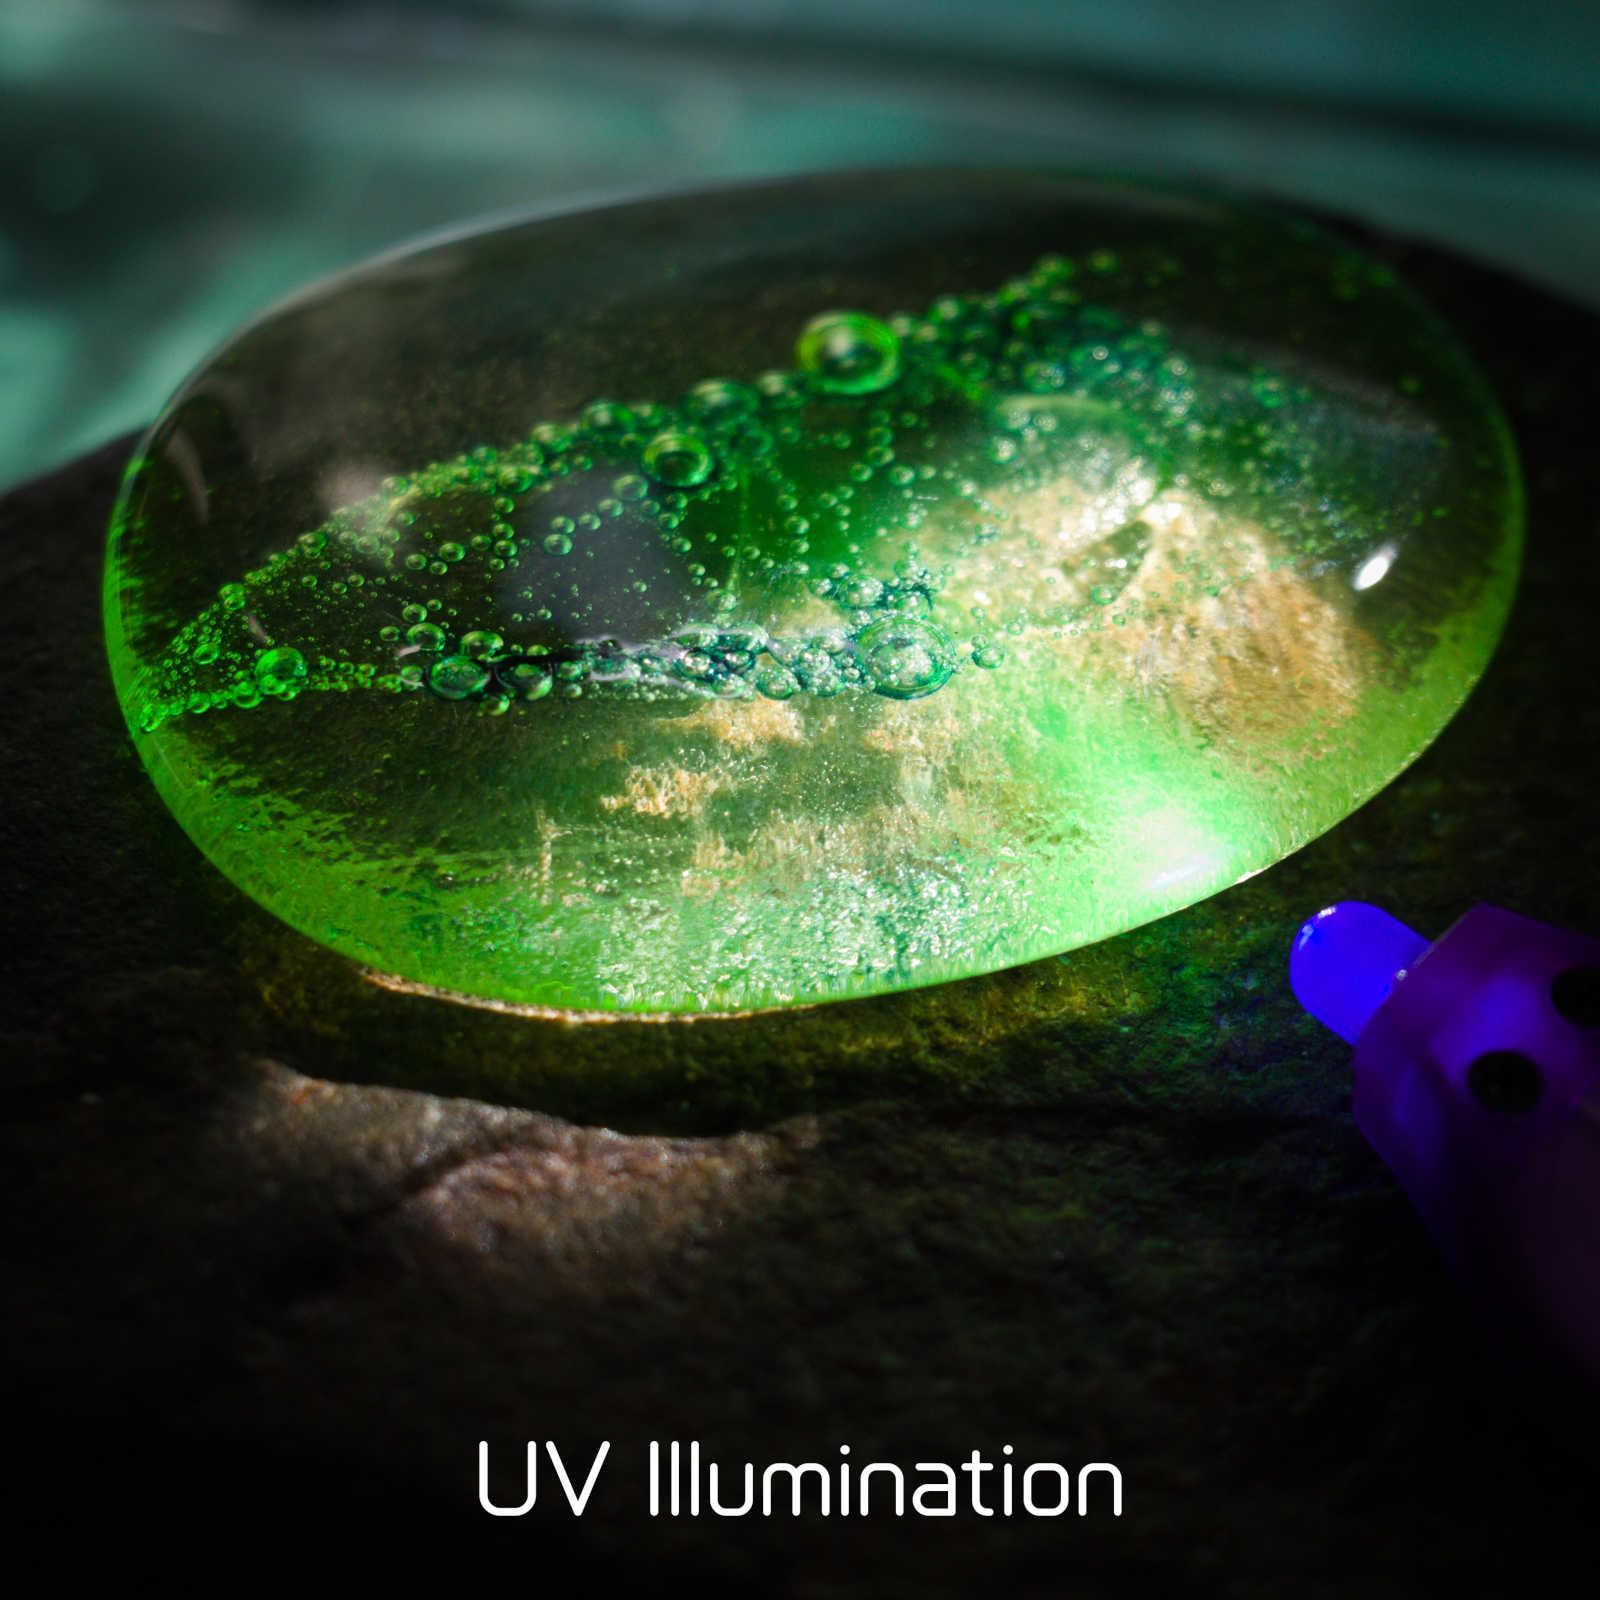 Uranium Glass, hearts motif under UV light